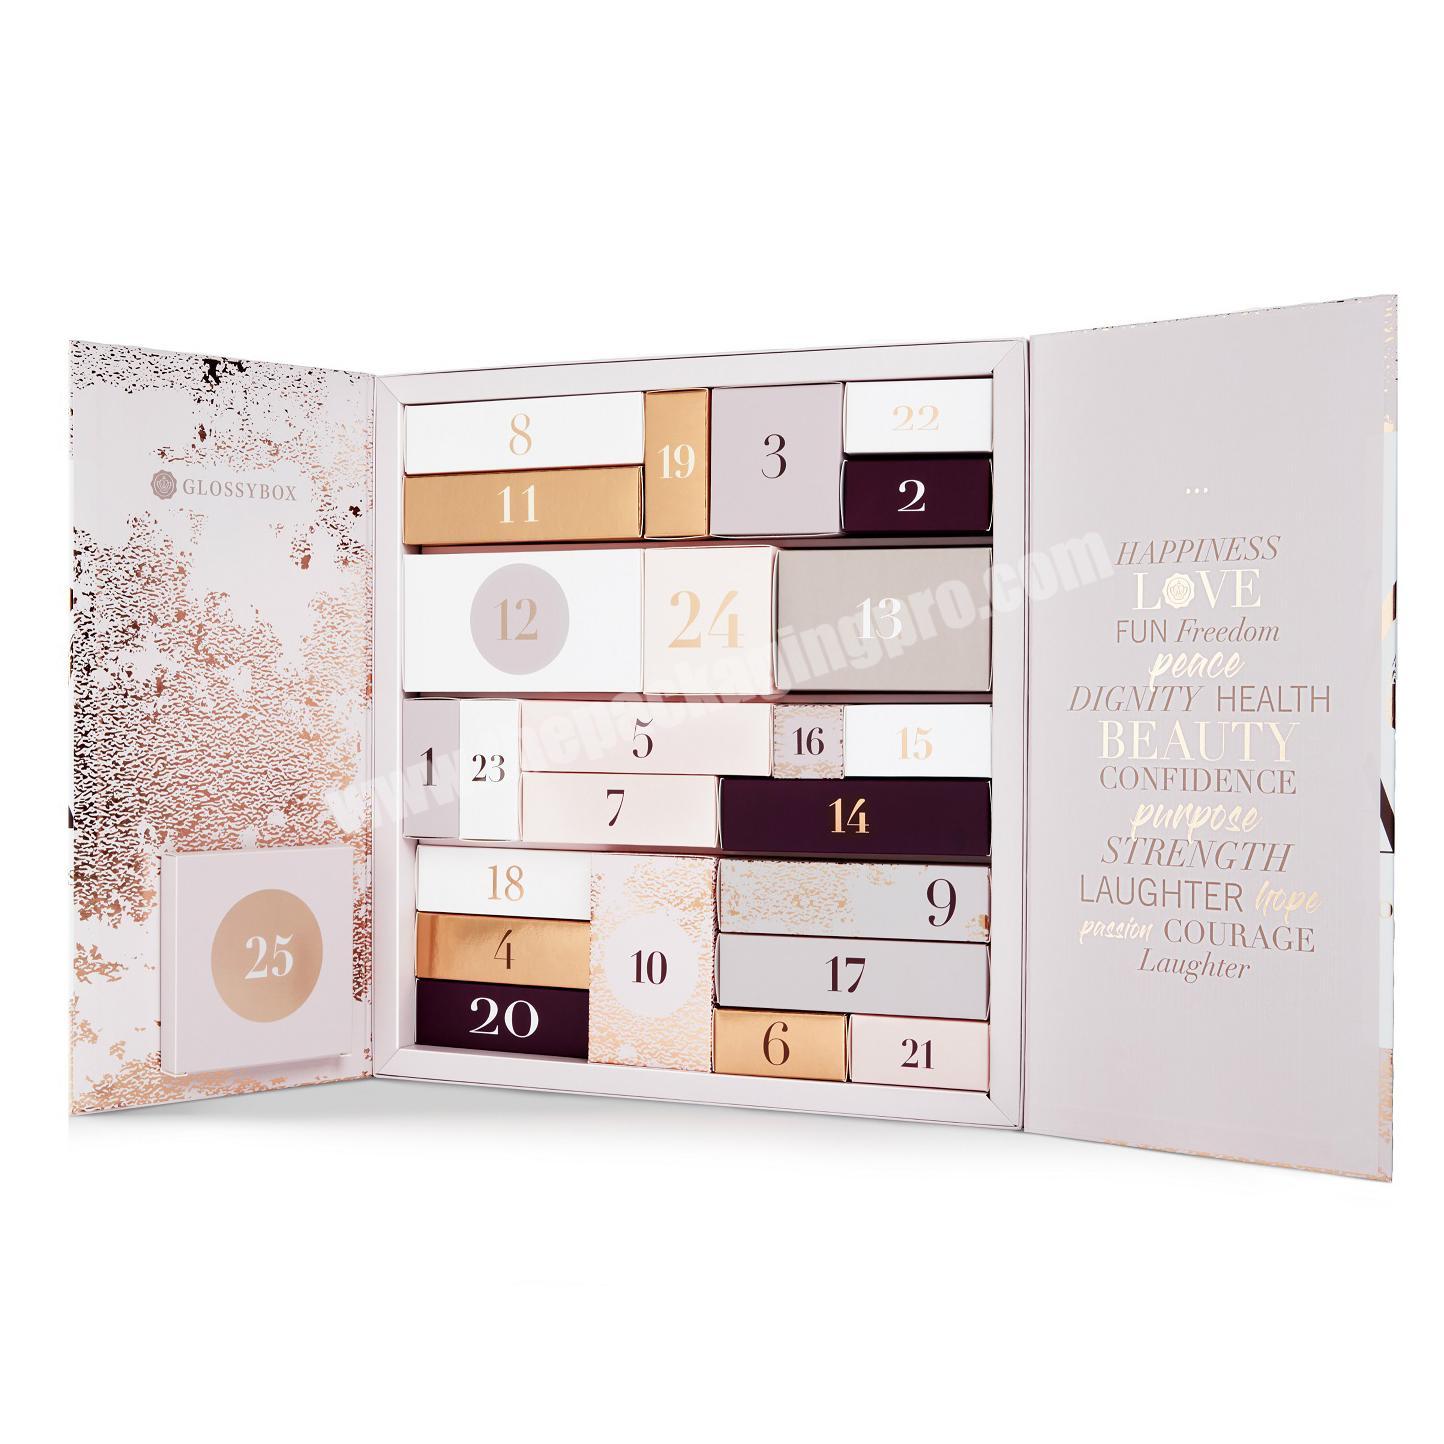 Custom Luxury Rigid Cardboard Cosmetics Beauty Packaging Christmas Advent Calendar Box for Girls